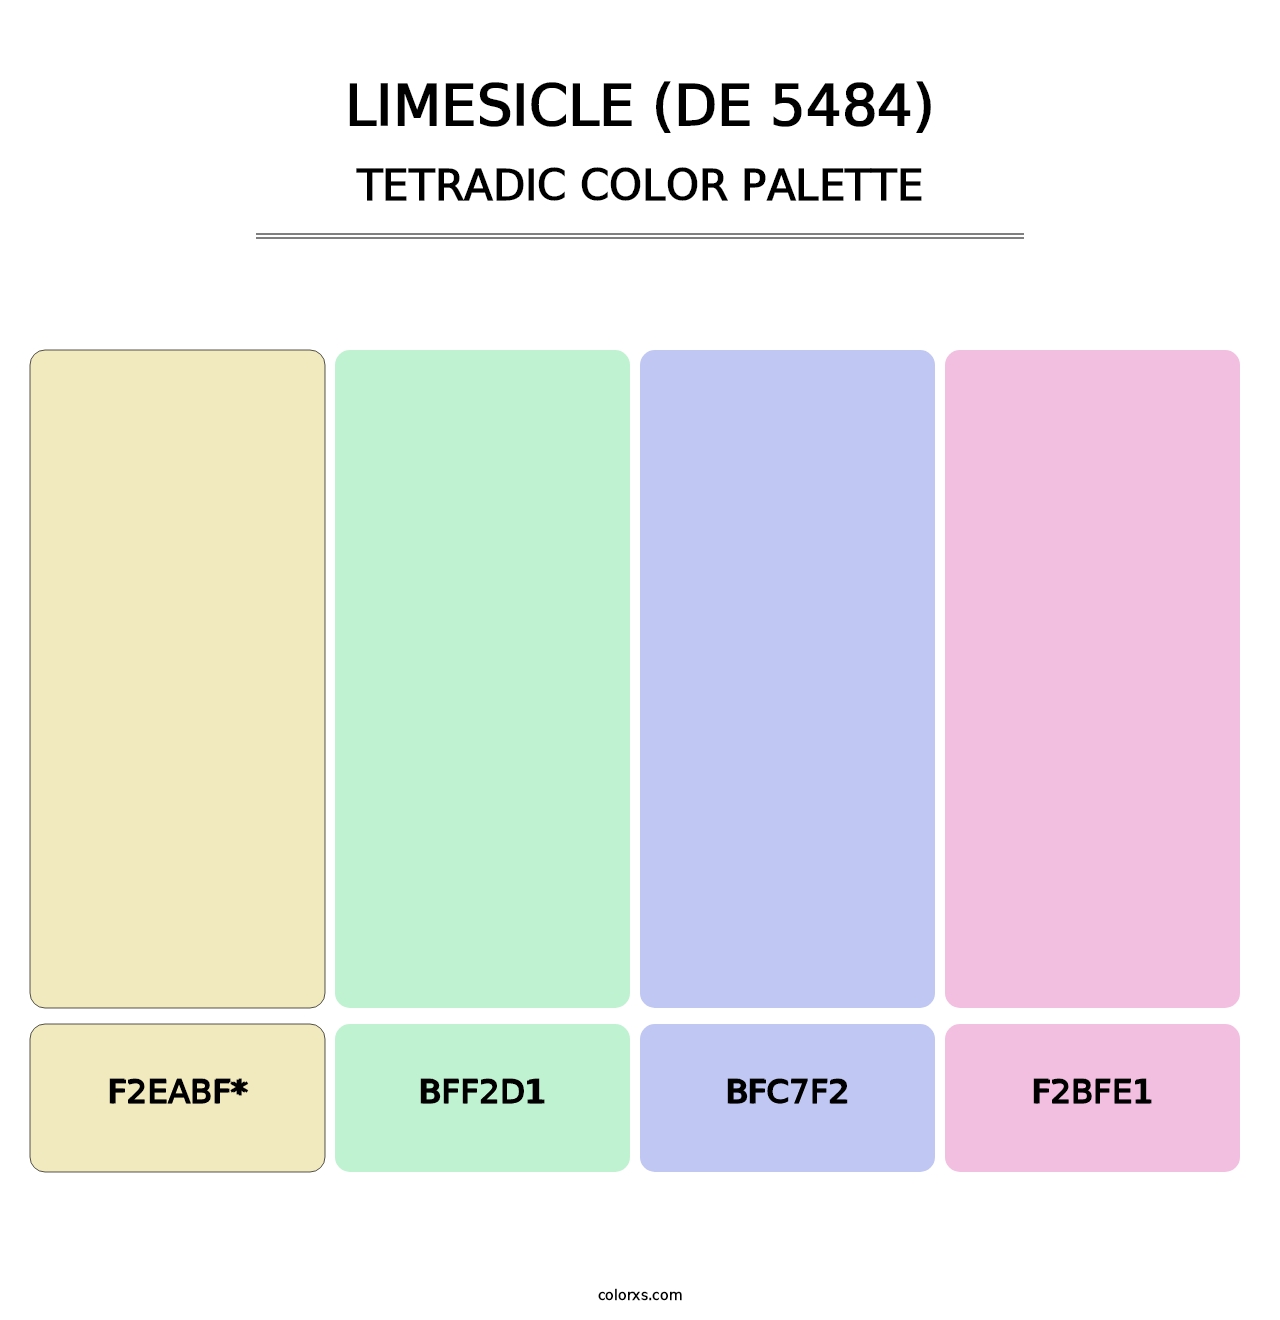 Limesicle (DE 5484) - Tetradic Color Palette